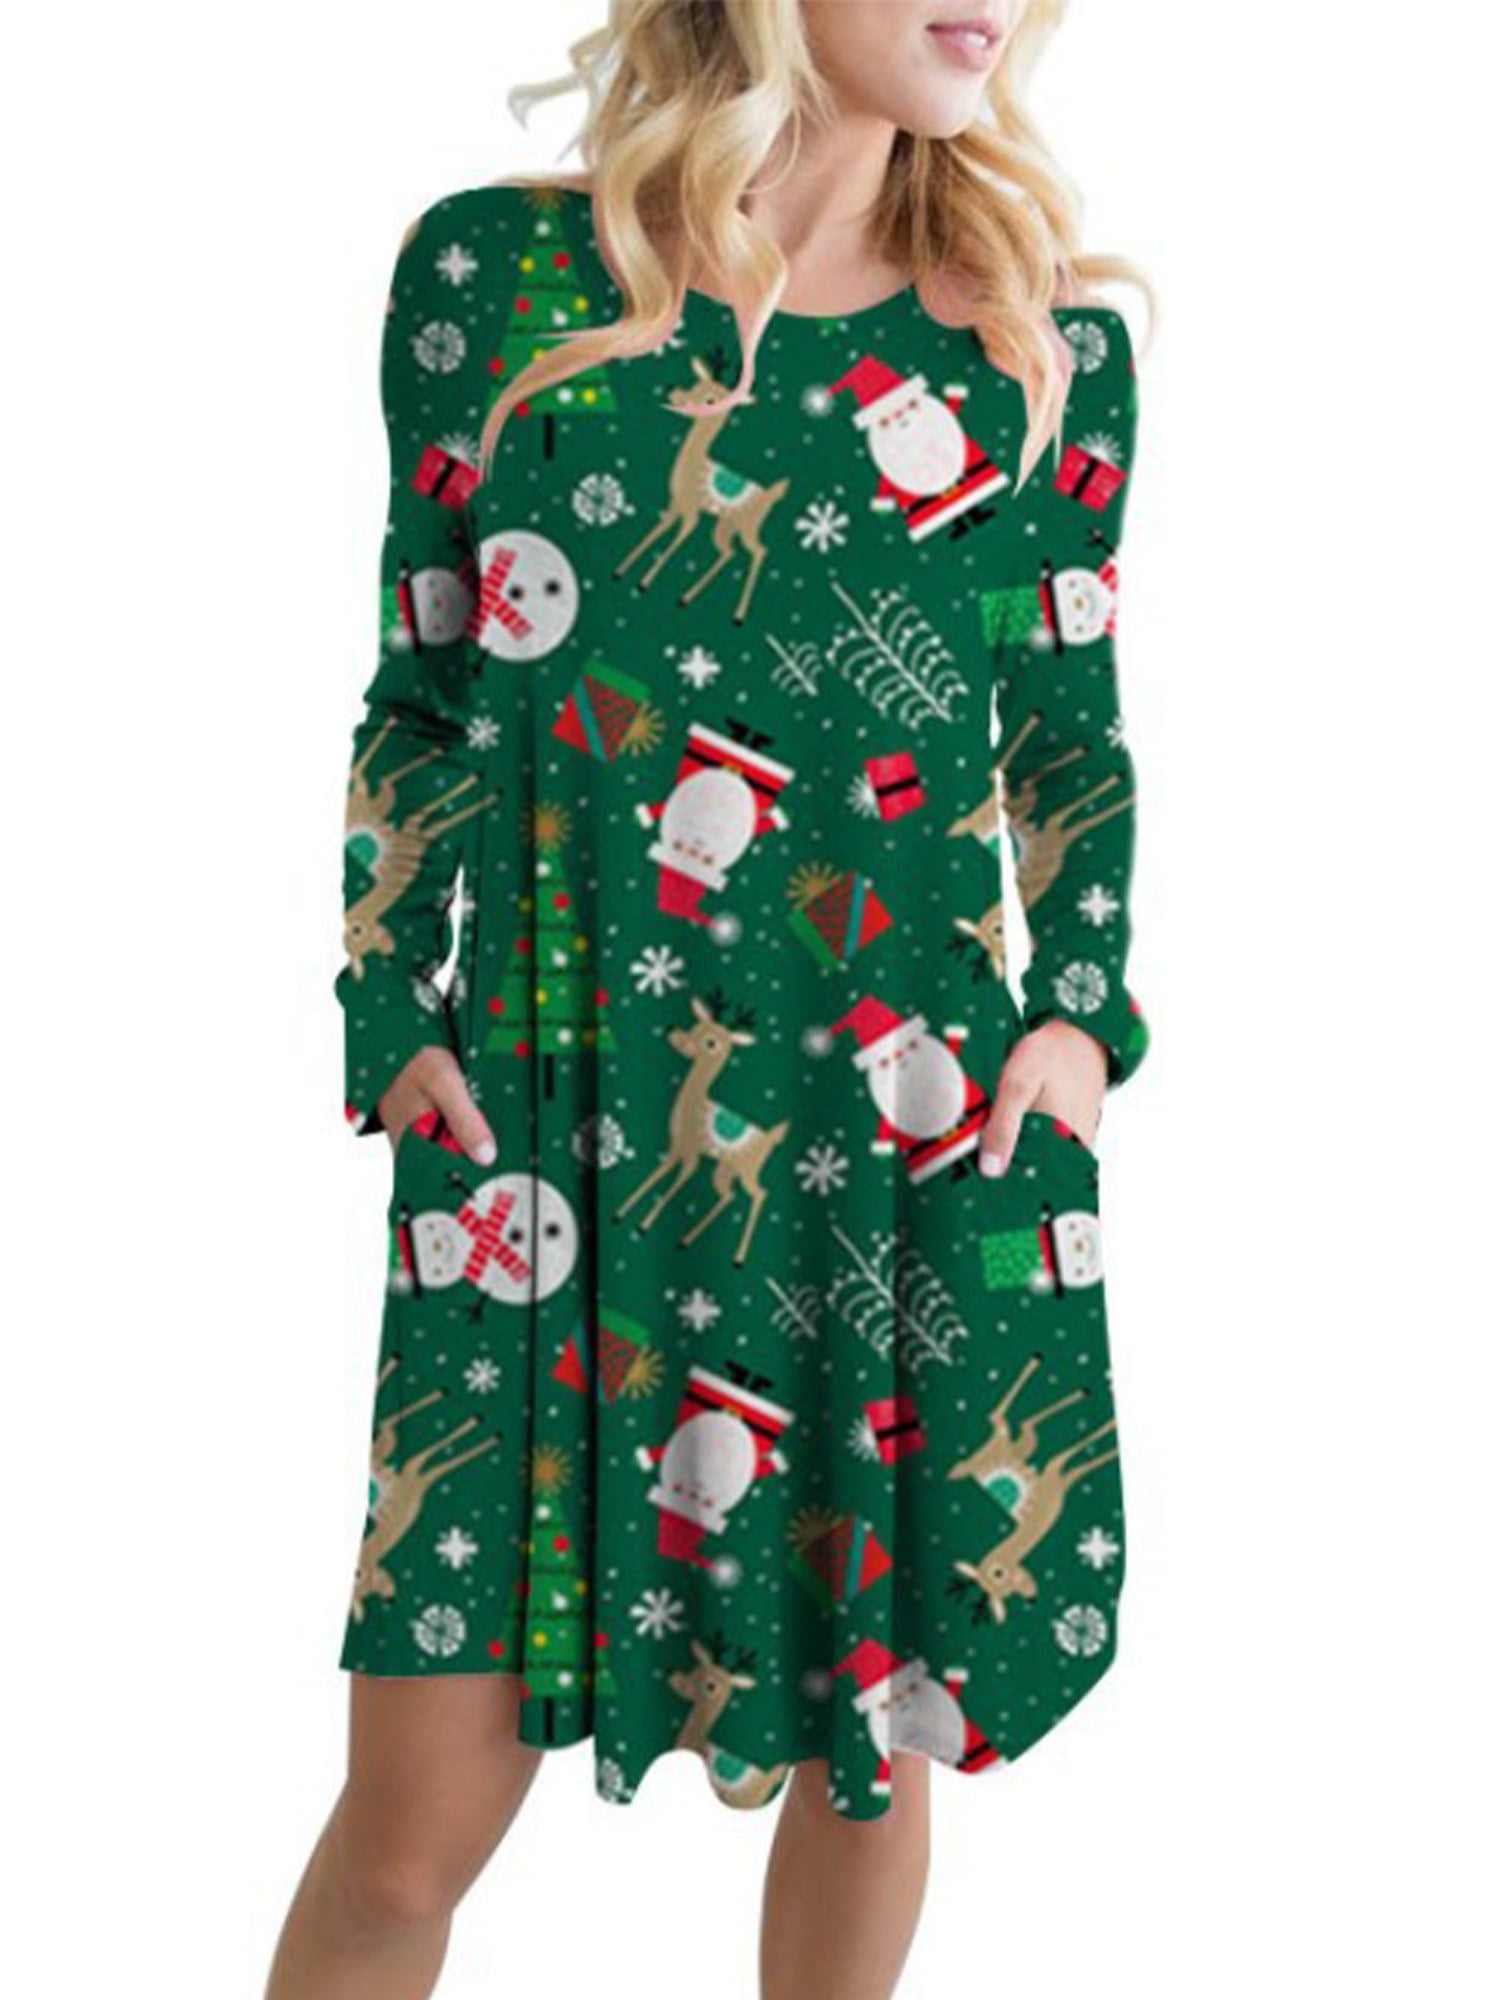 Plus Size Christmas Dress for Women ...